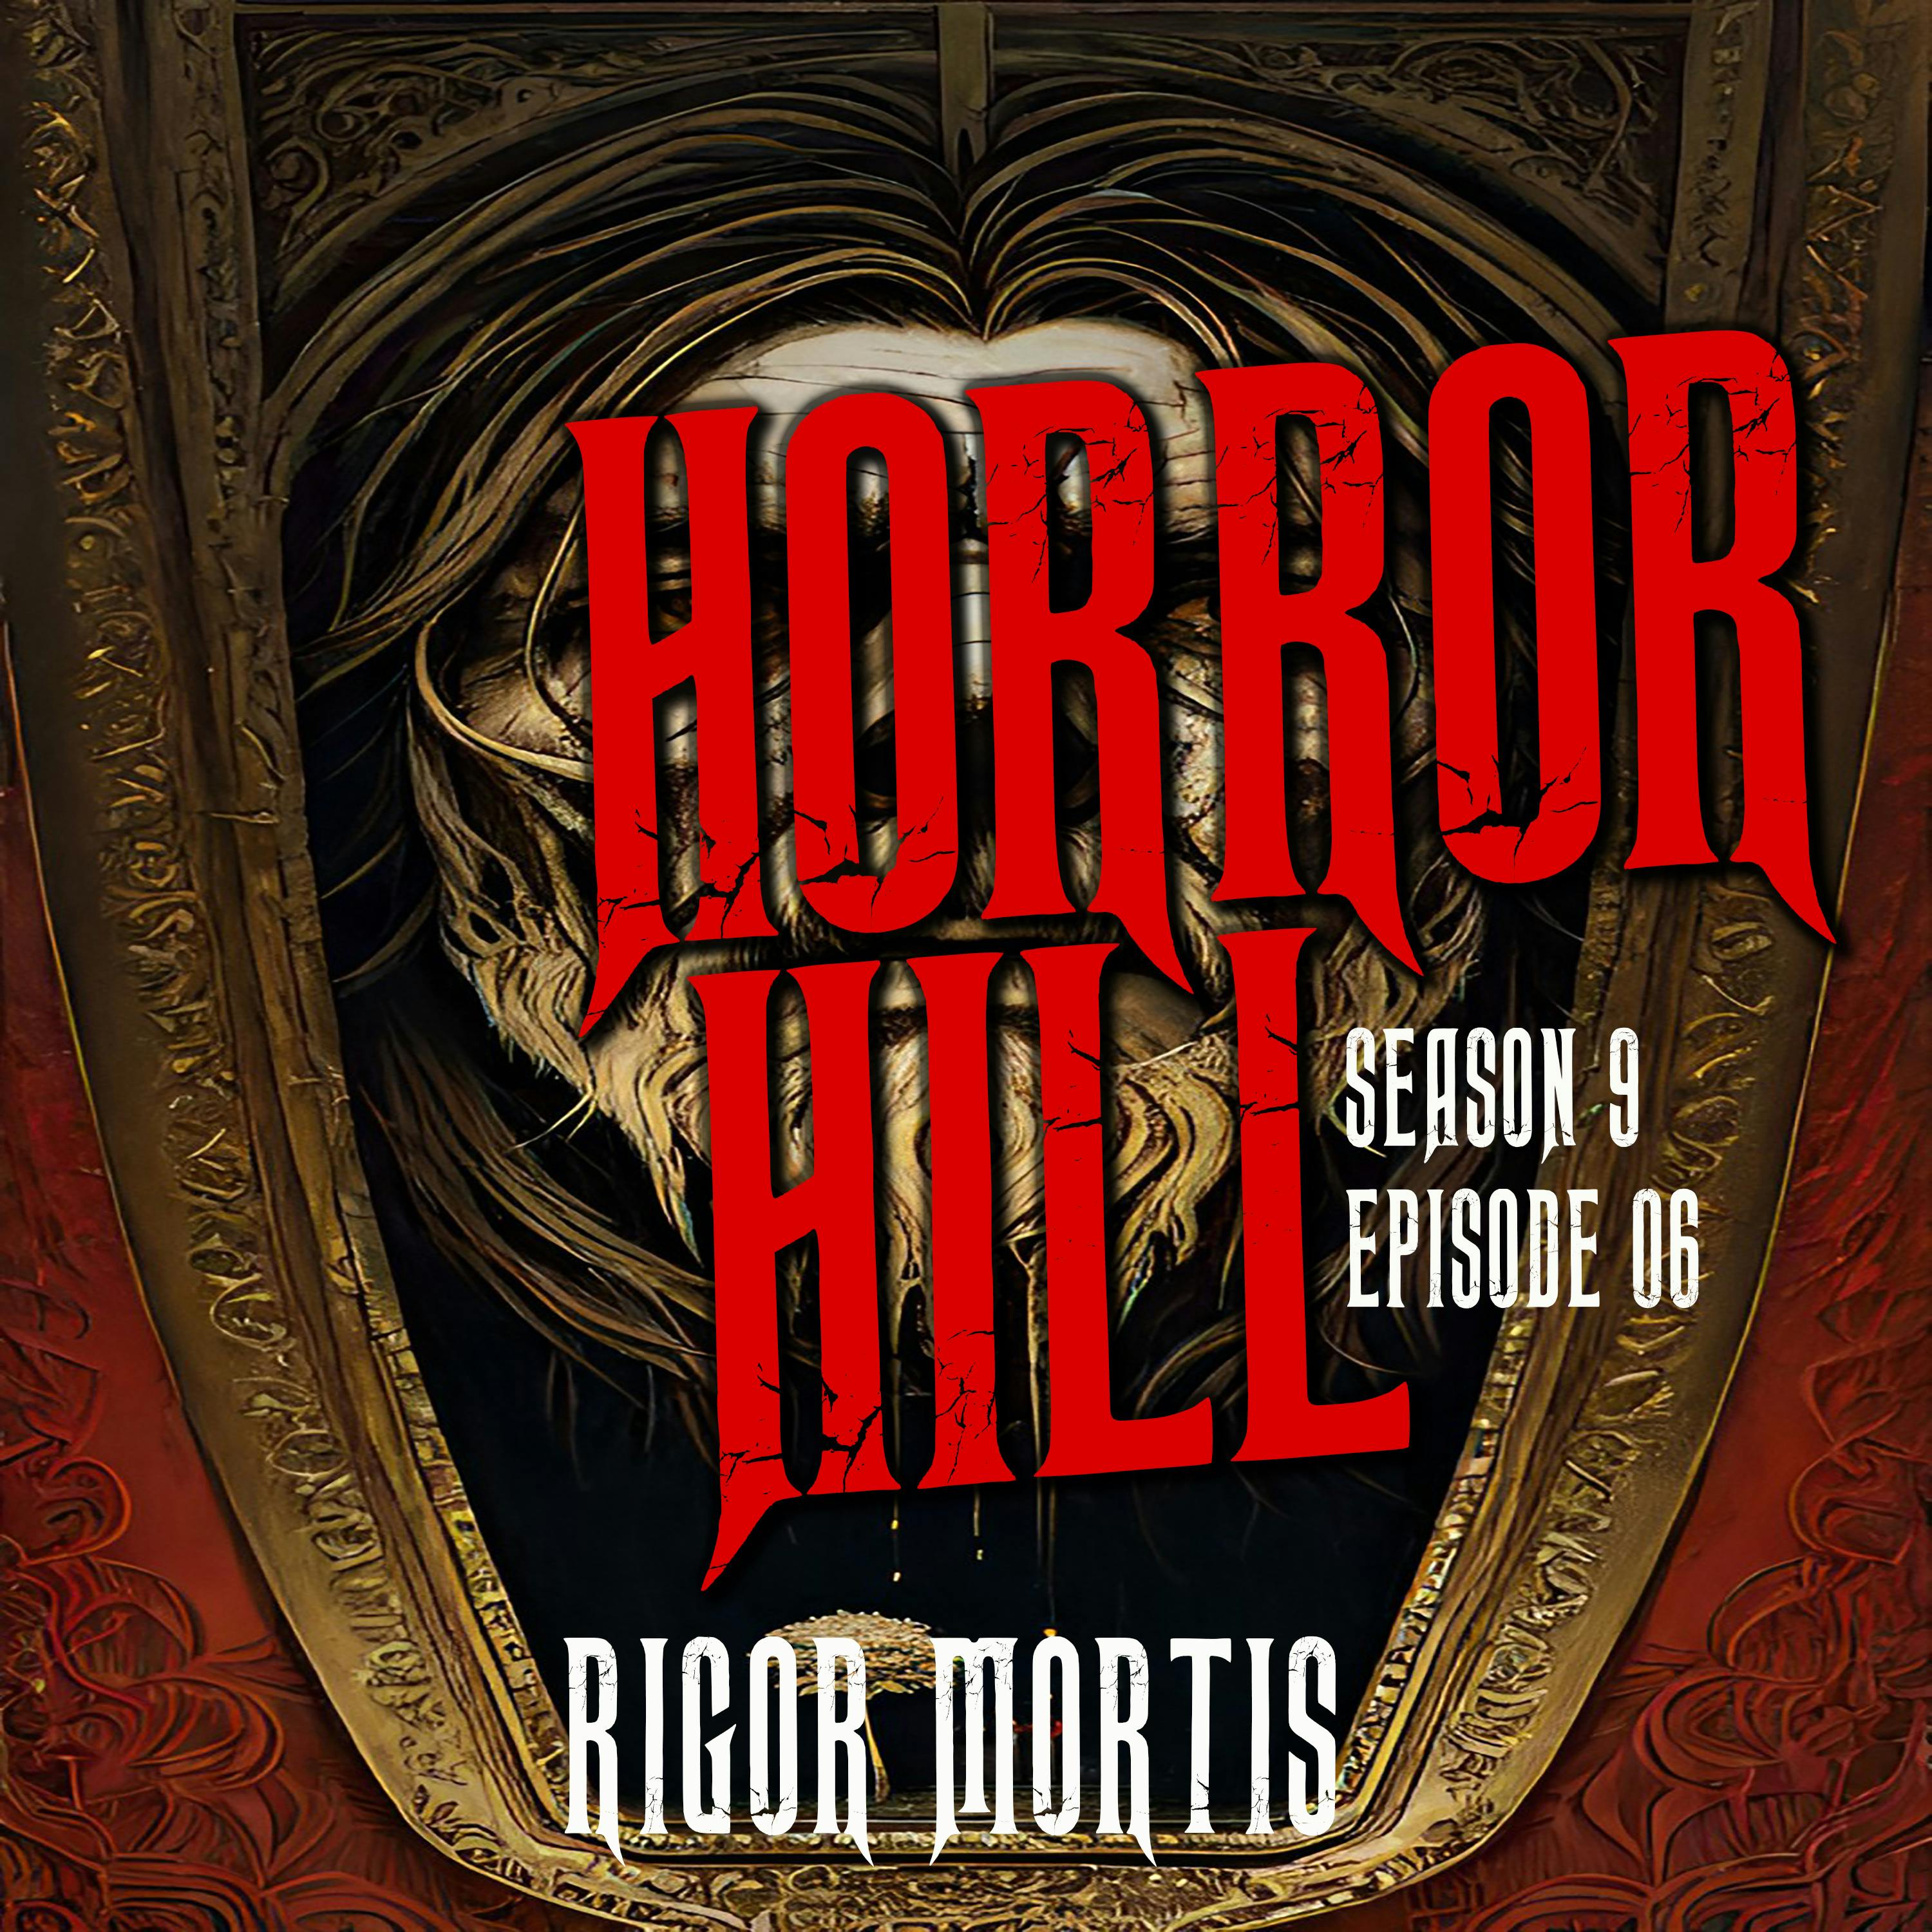 S9E06 - “Rigor Mortis" - Horror Hill